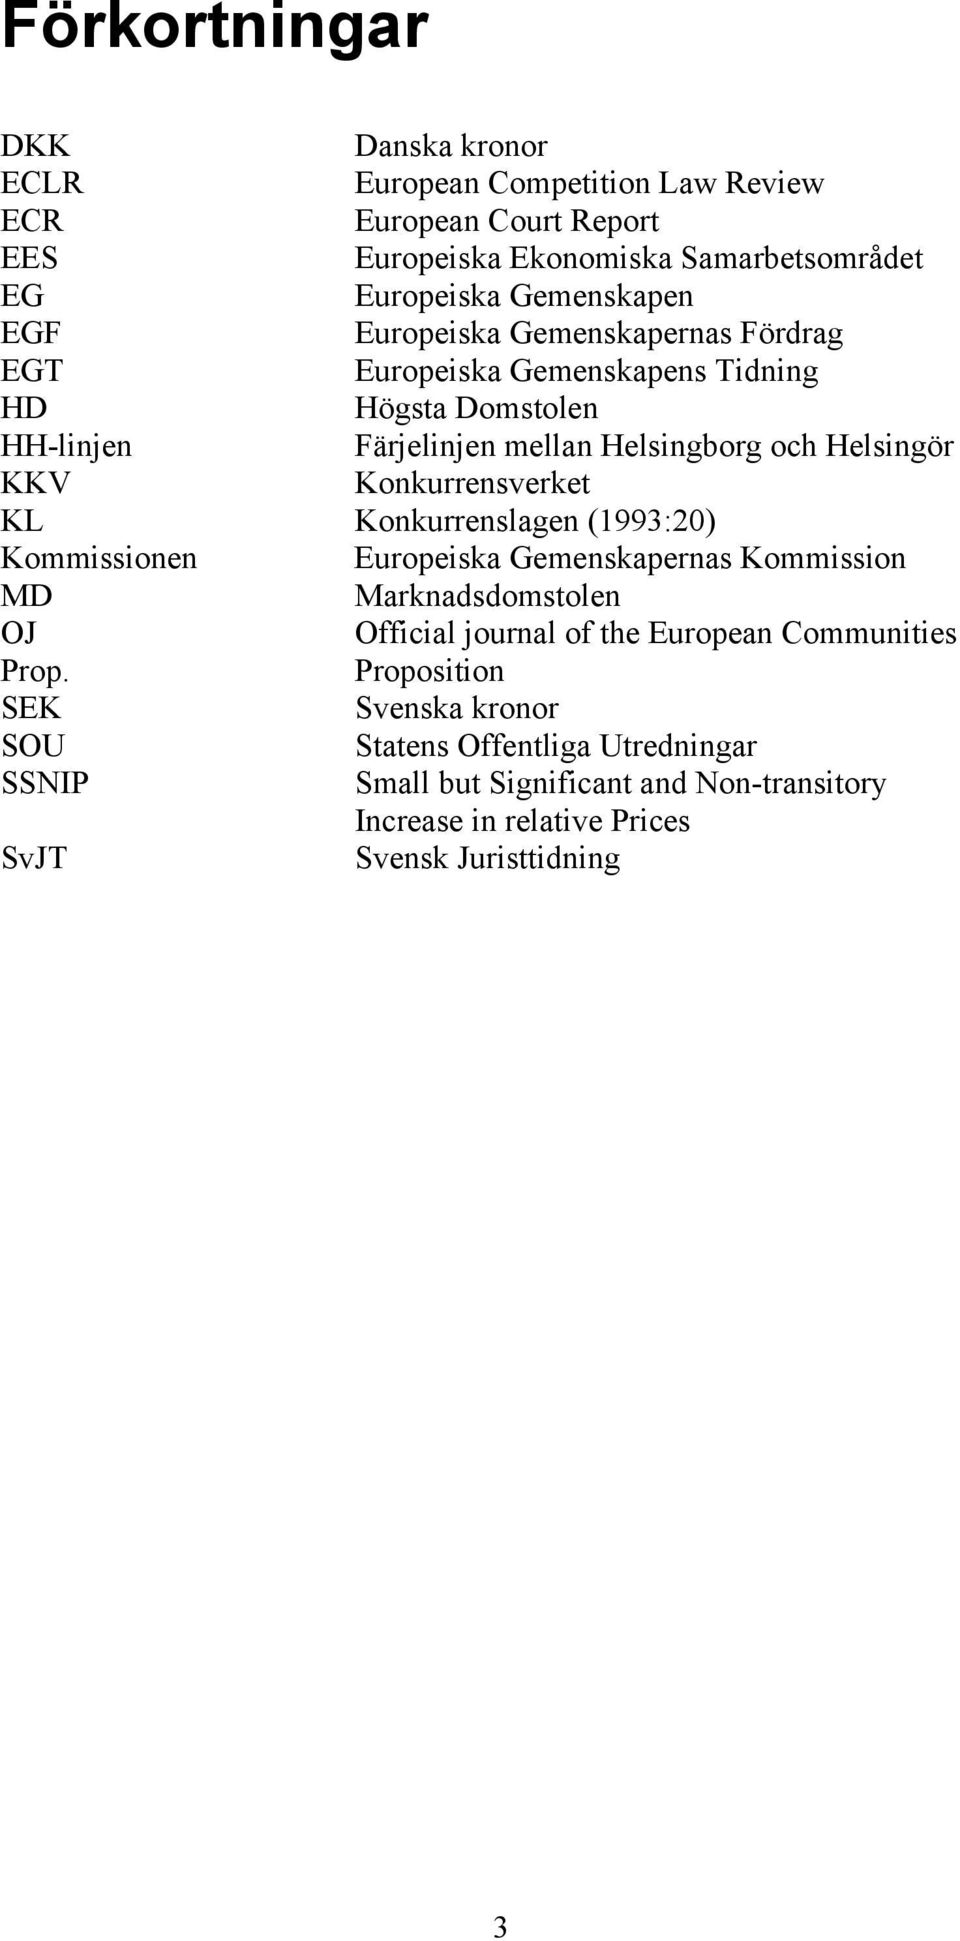 Konkurrensverket KL Konkurrenslagen (1993:20) Kommissionen Europeiska Gemenskapernas Kommission MD Marknadsdomstolen OJ Official journal of the European